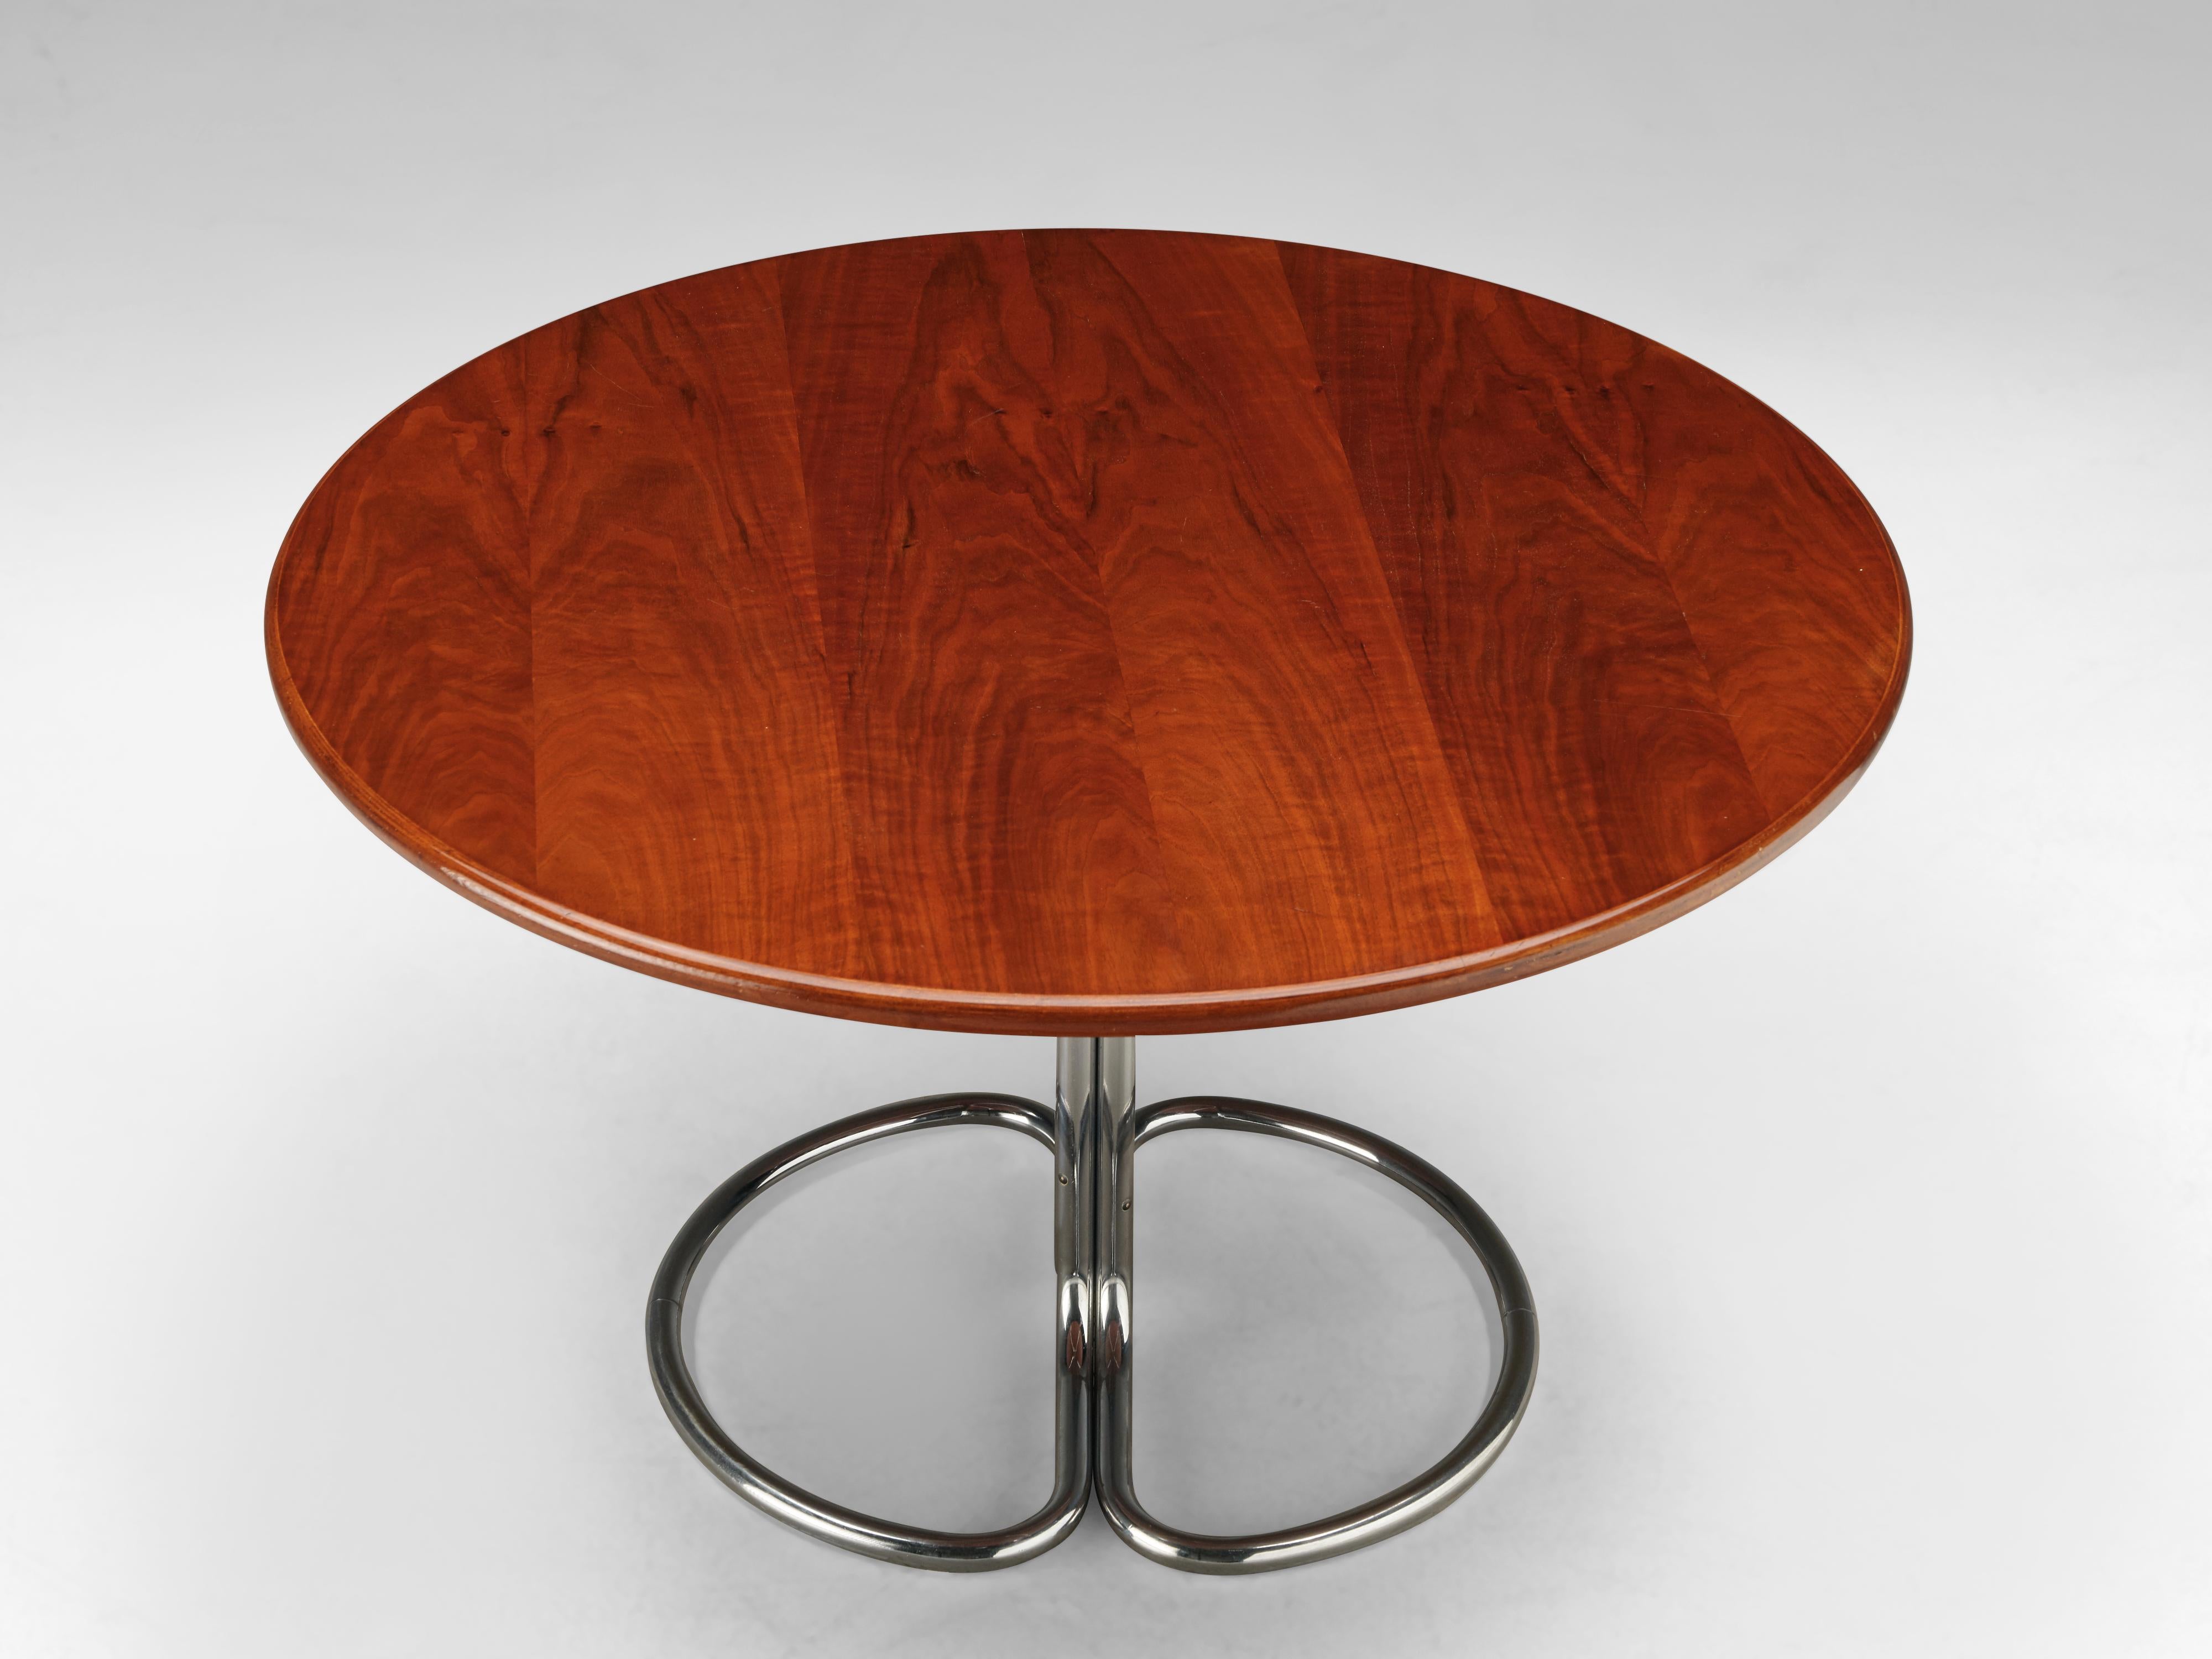 Acier Table 'Maia' de Giotto Stoppino en noyer et chaises de salle à manger 'Nikke' de Tapio Wirkkala en vente